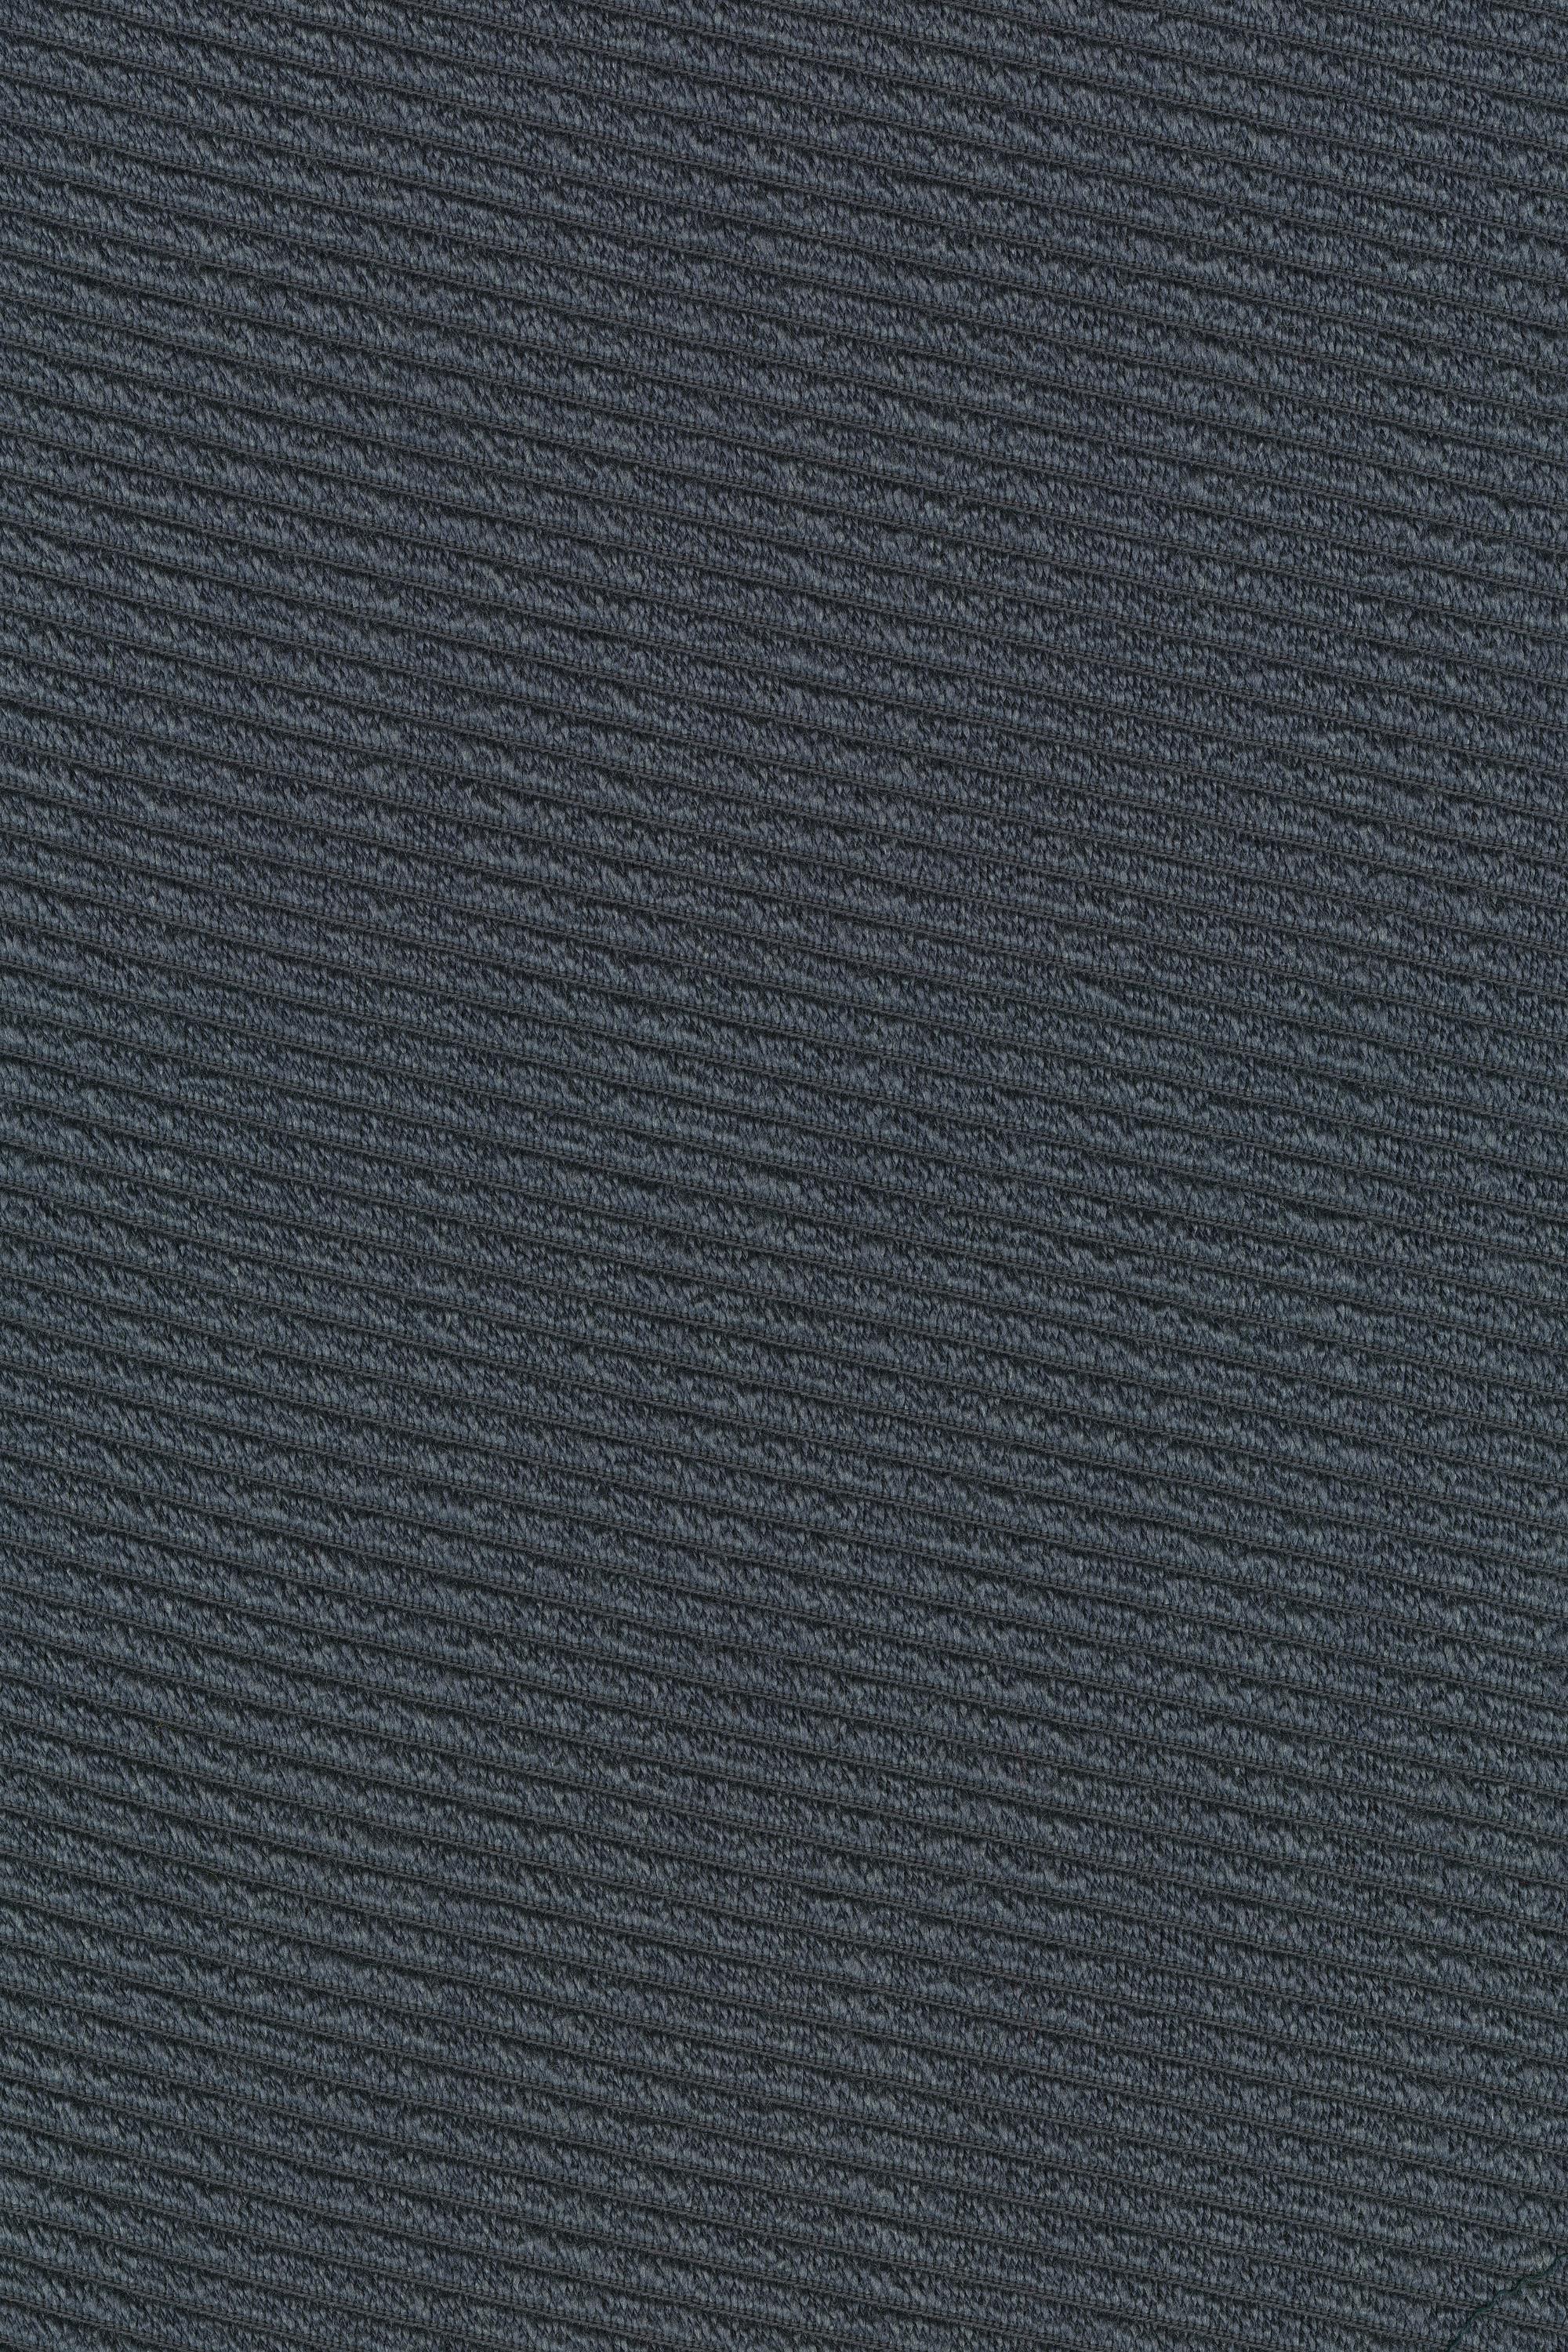 Kvadrat Aaren Upholstery Fabric 0173 by Raf Simons